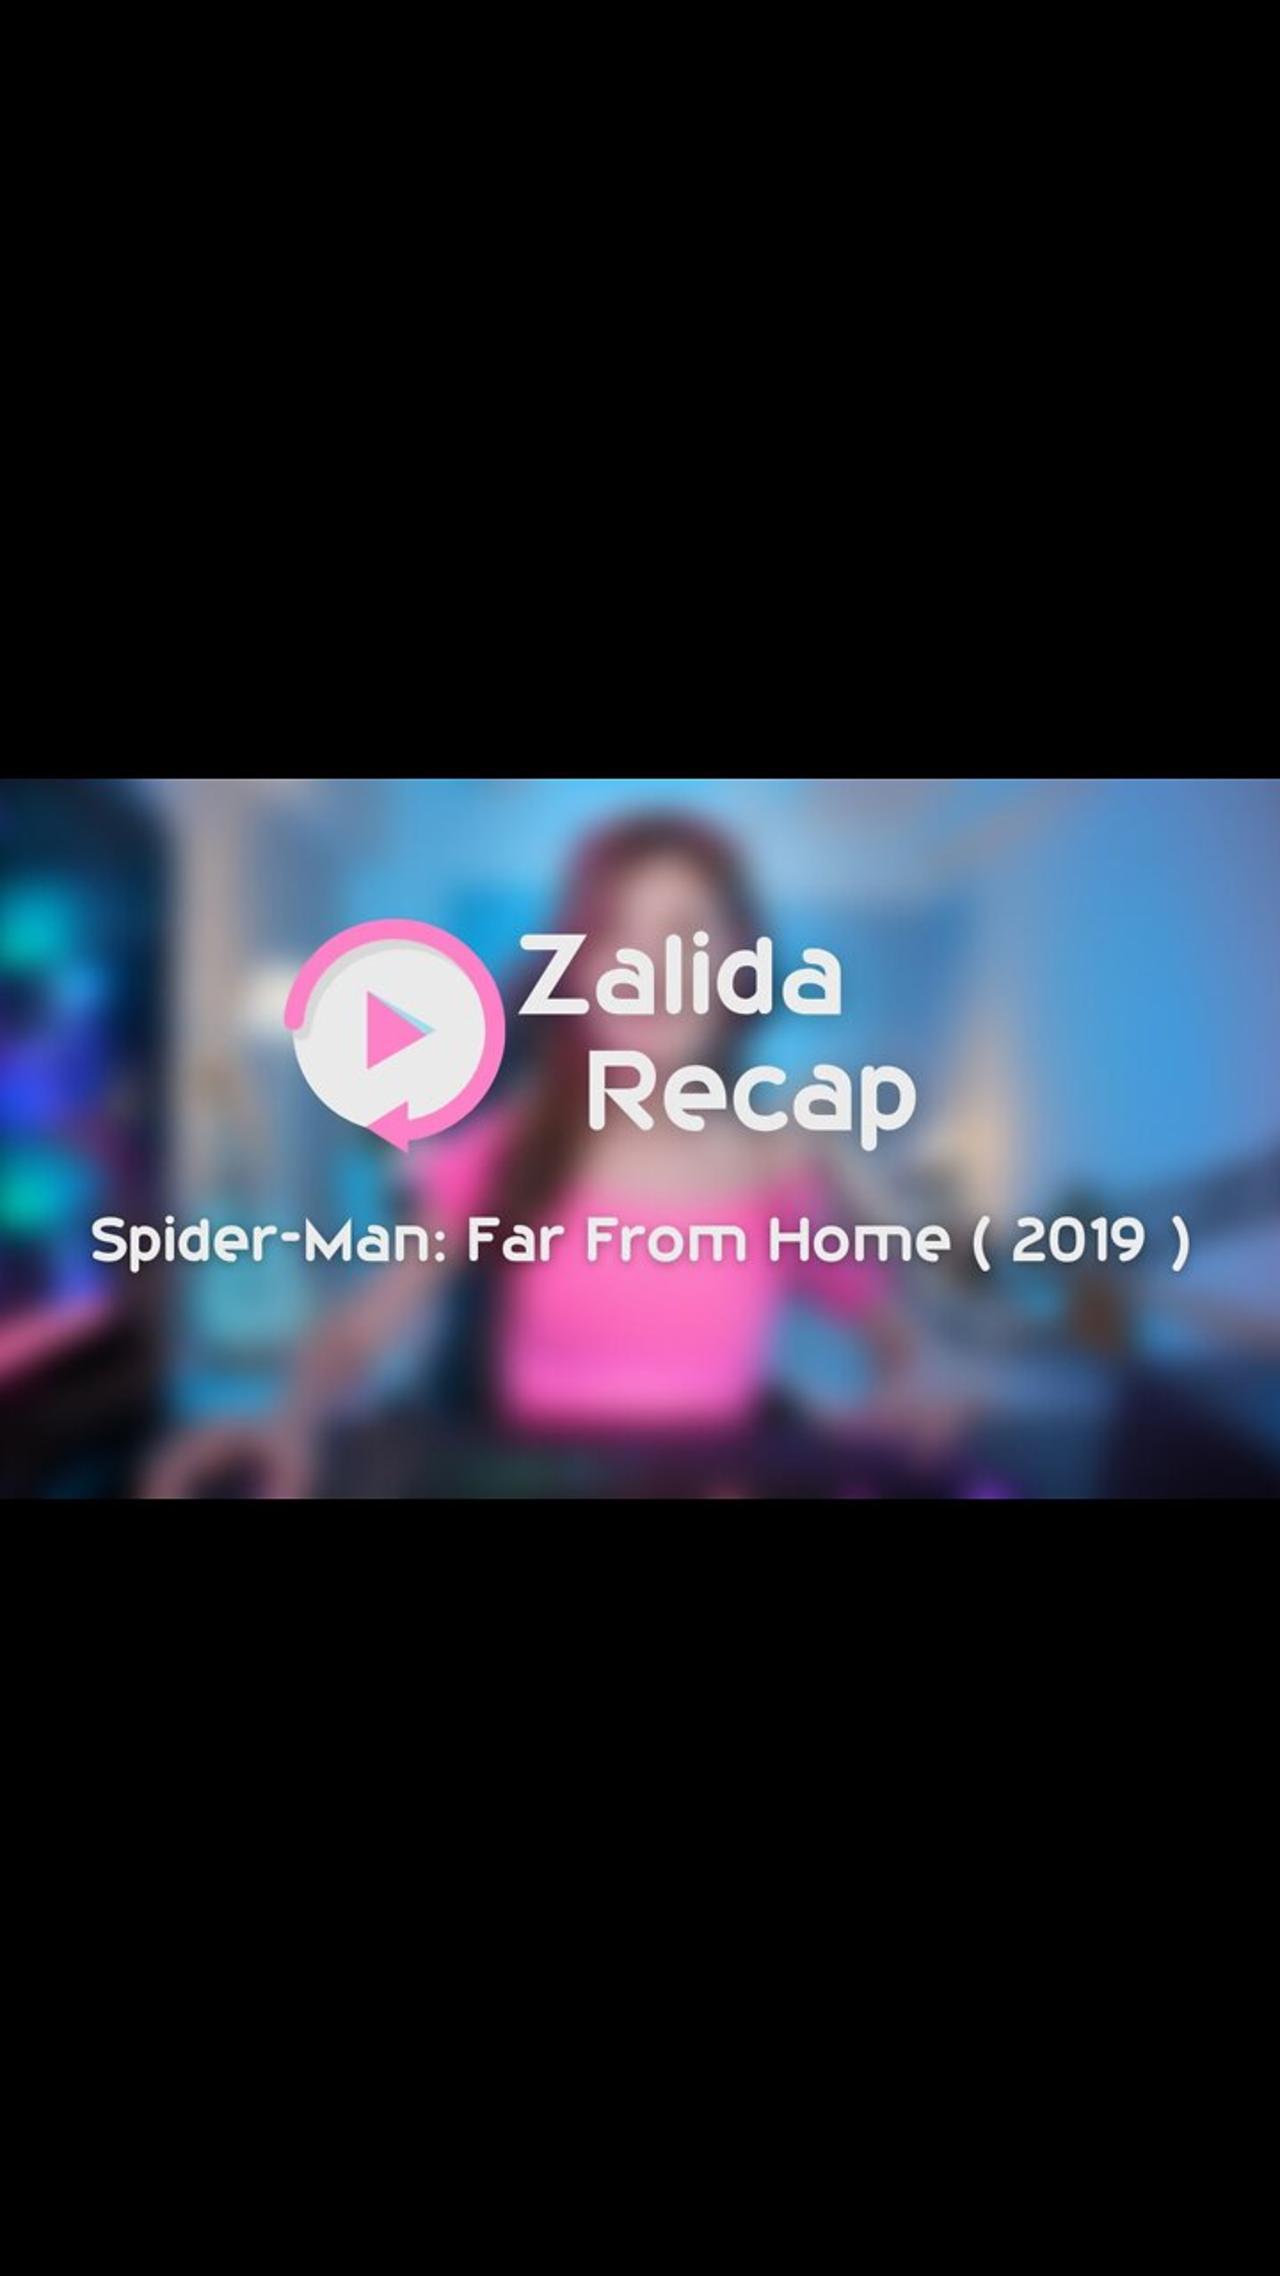 Spider-Man Far from Home ( 2019 ) - Movie Recap Summary